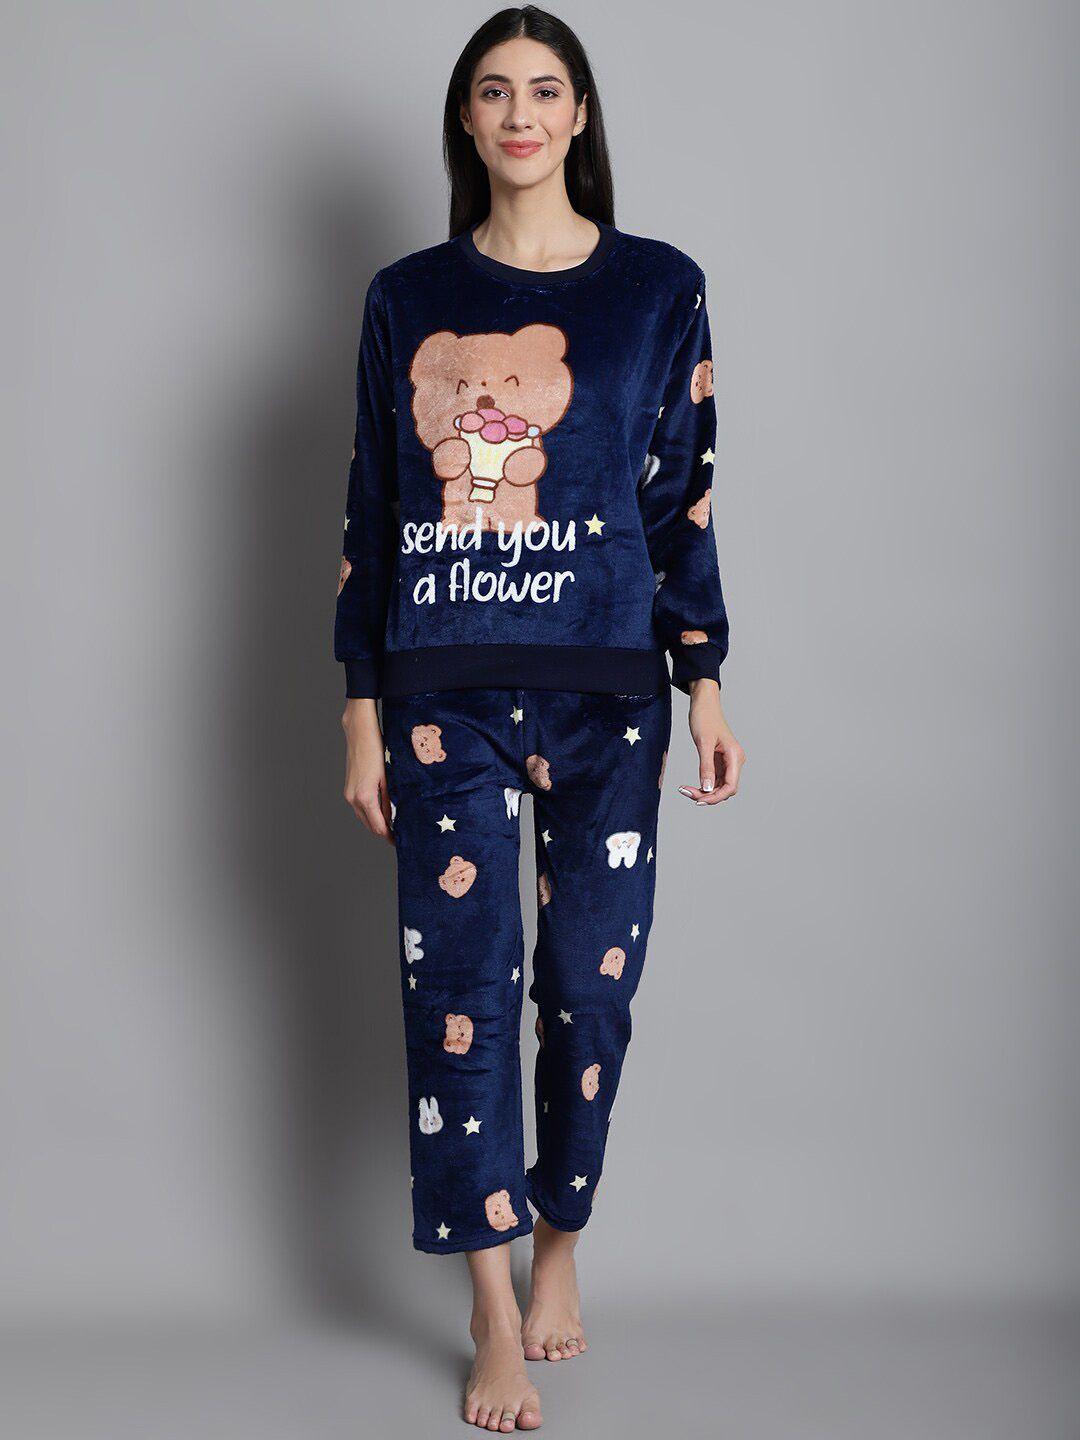 jinfo printed fleece top and pyjamas night suit